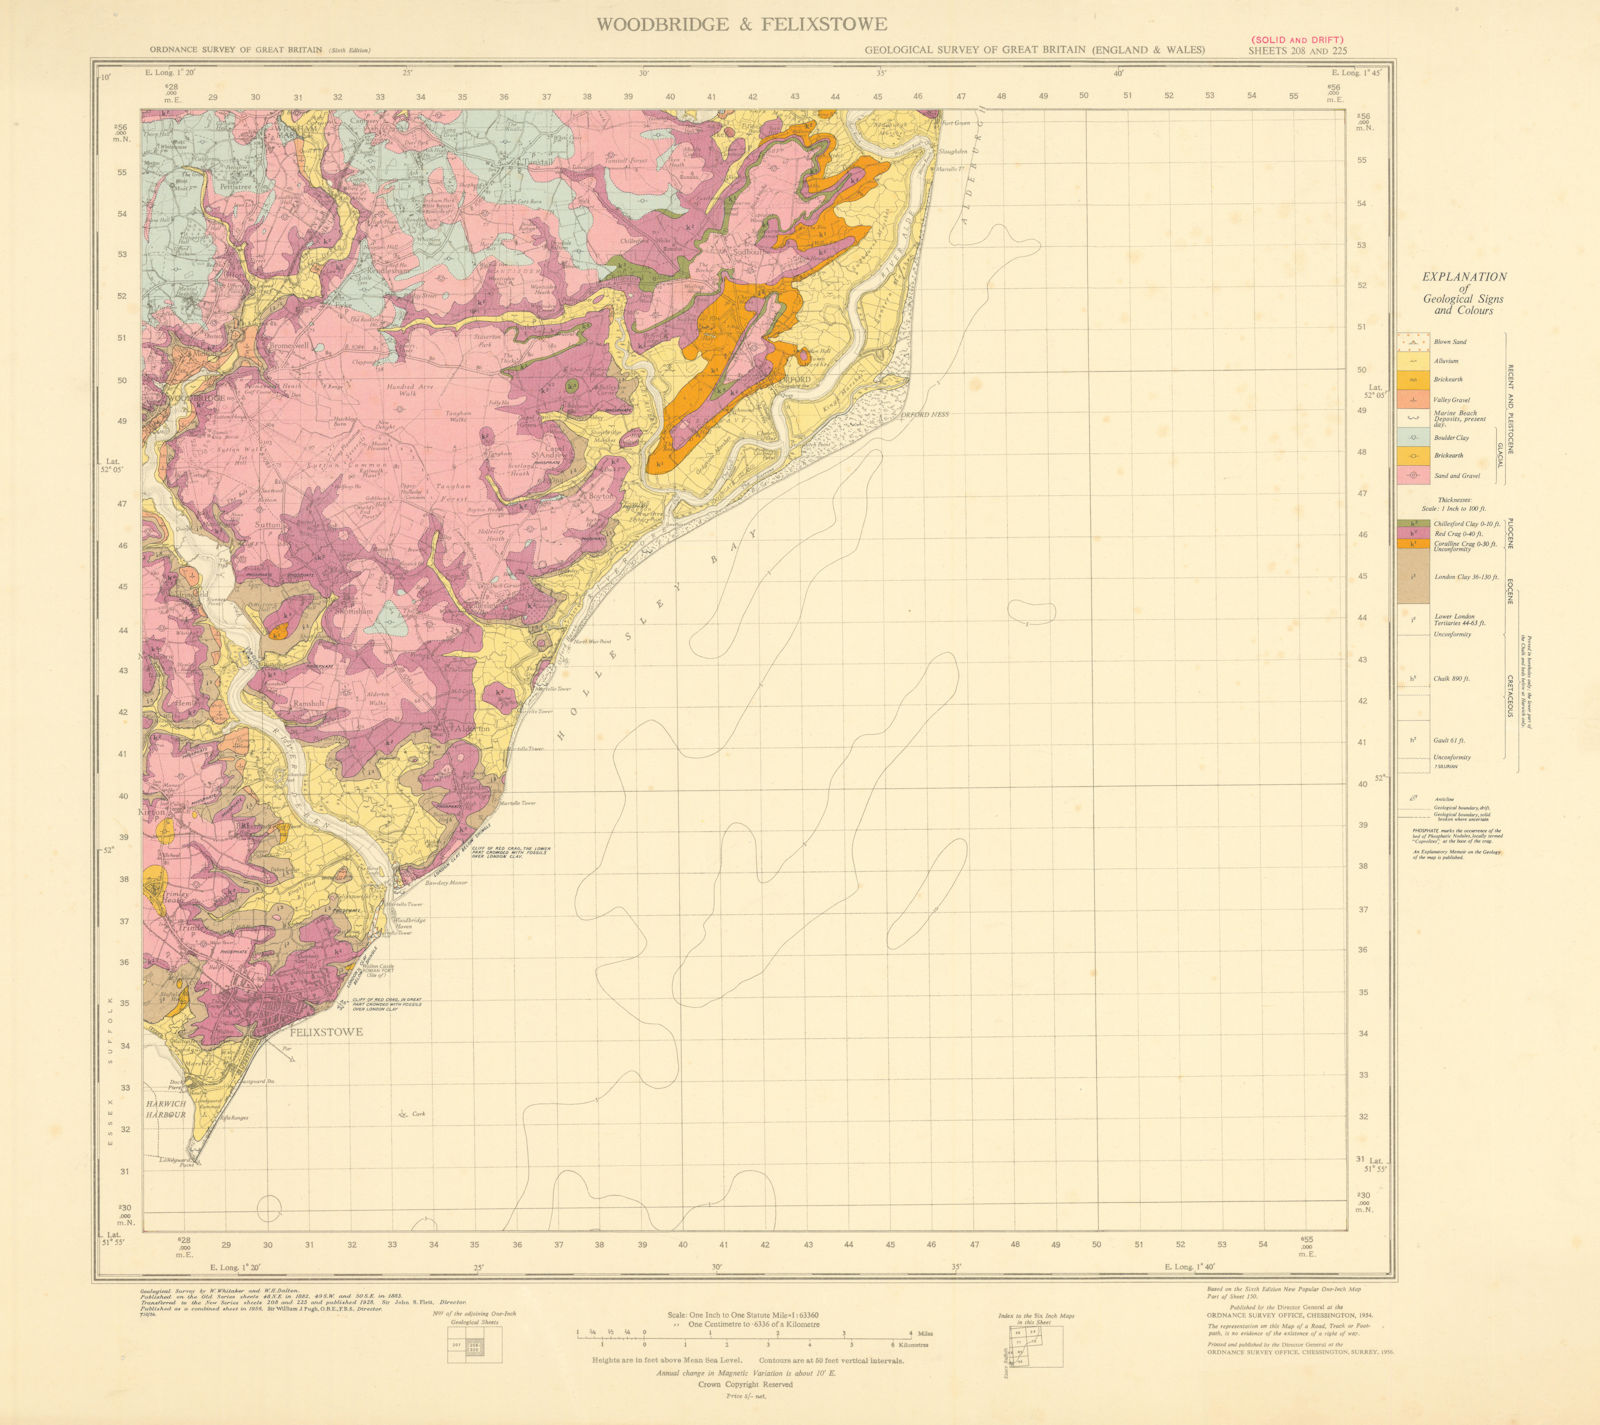 Associate Product Woodbridge Felixstowe geological survey sheet 208+ Suffolk Coast Heaths 1956 map